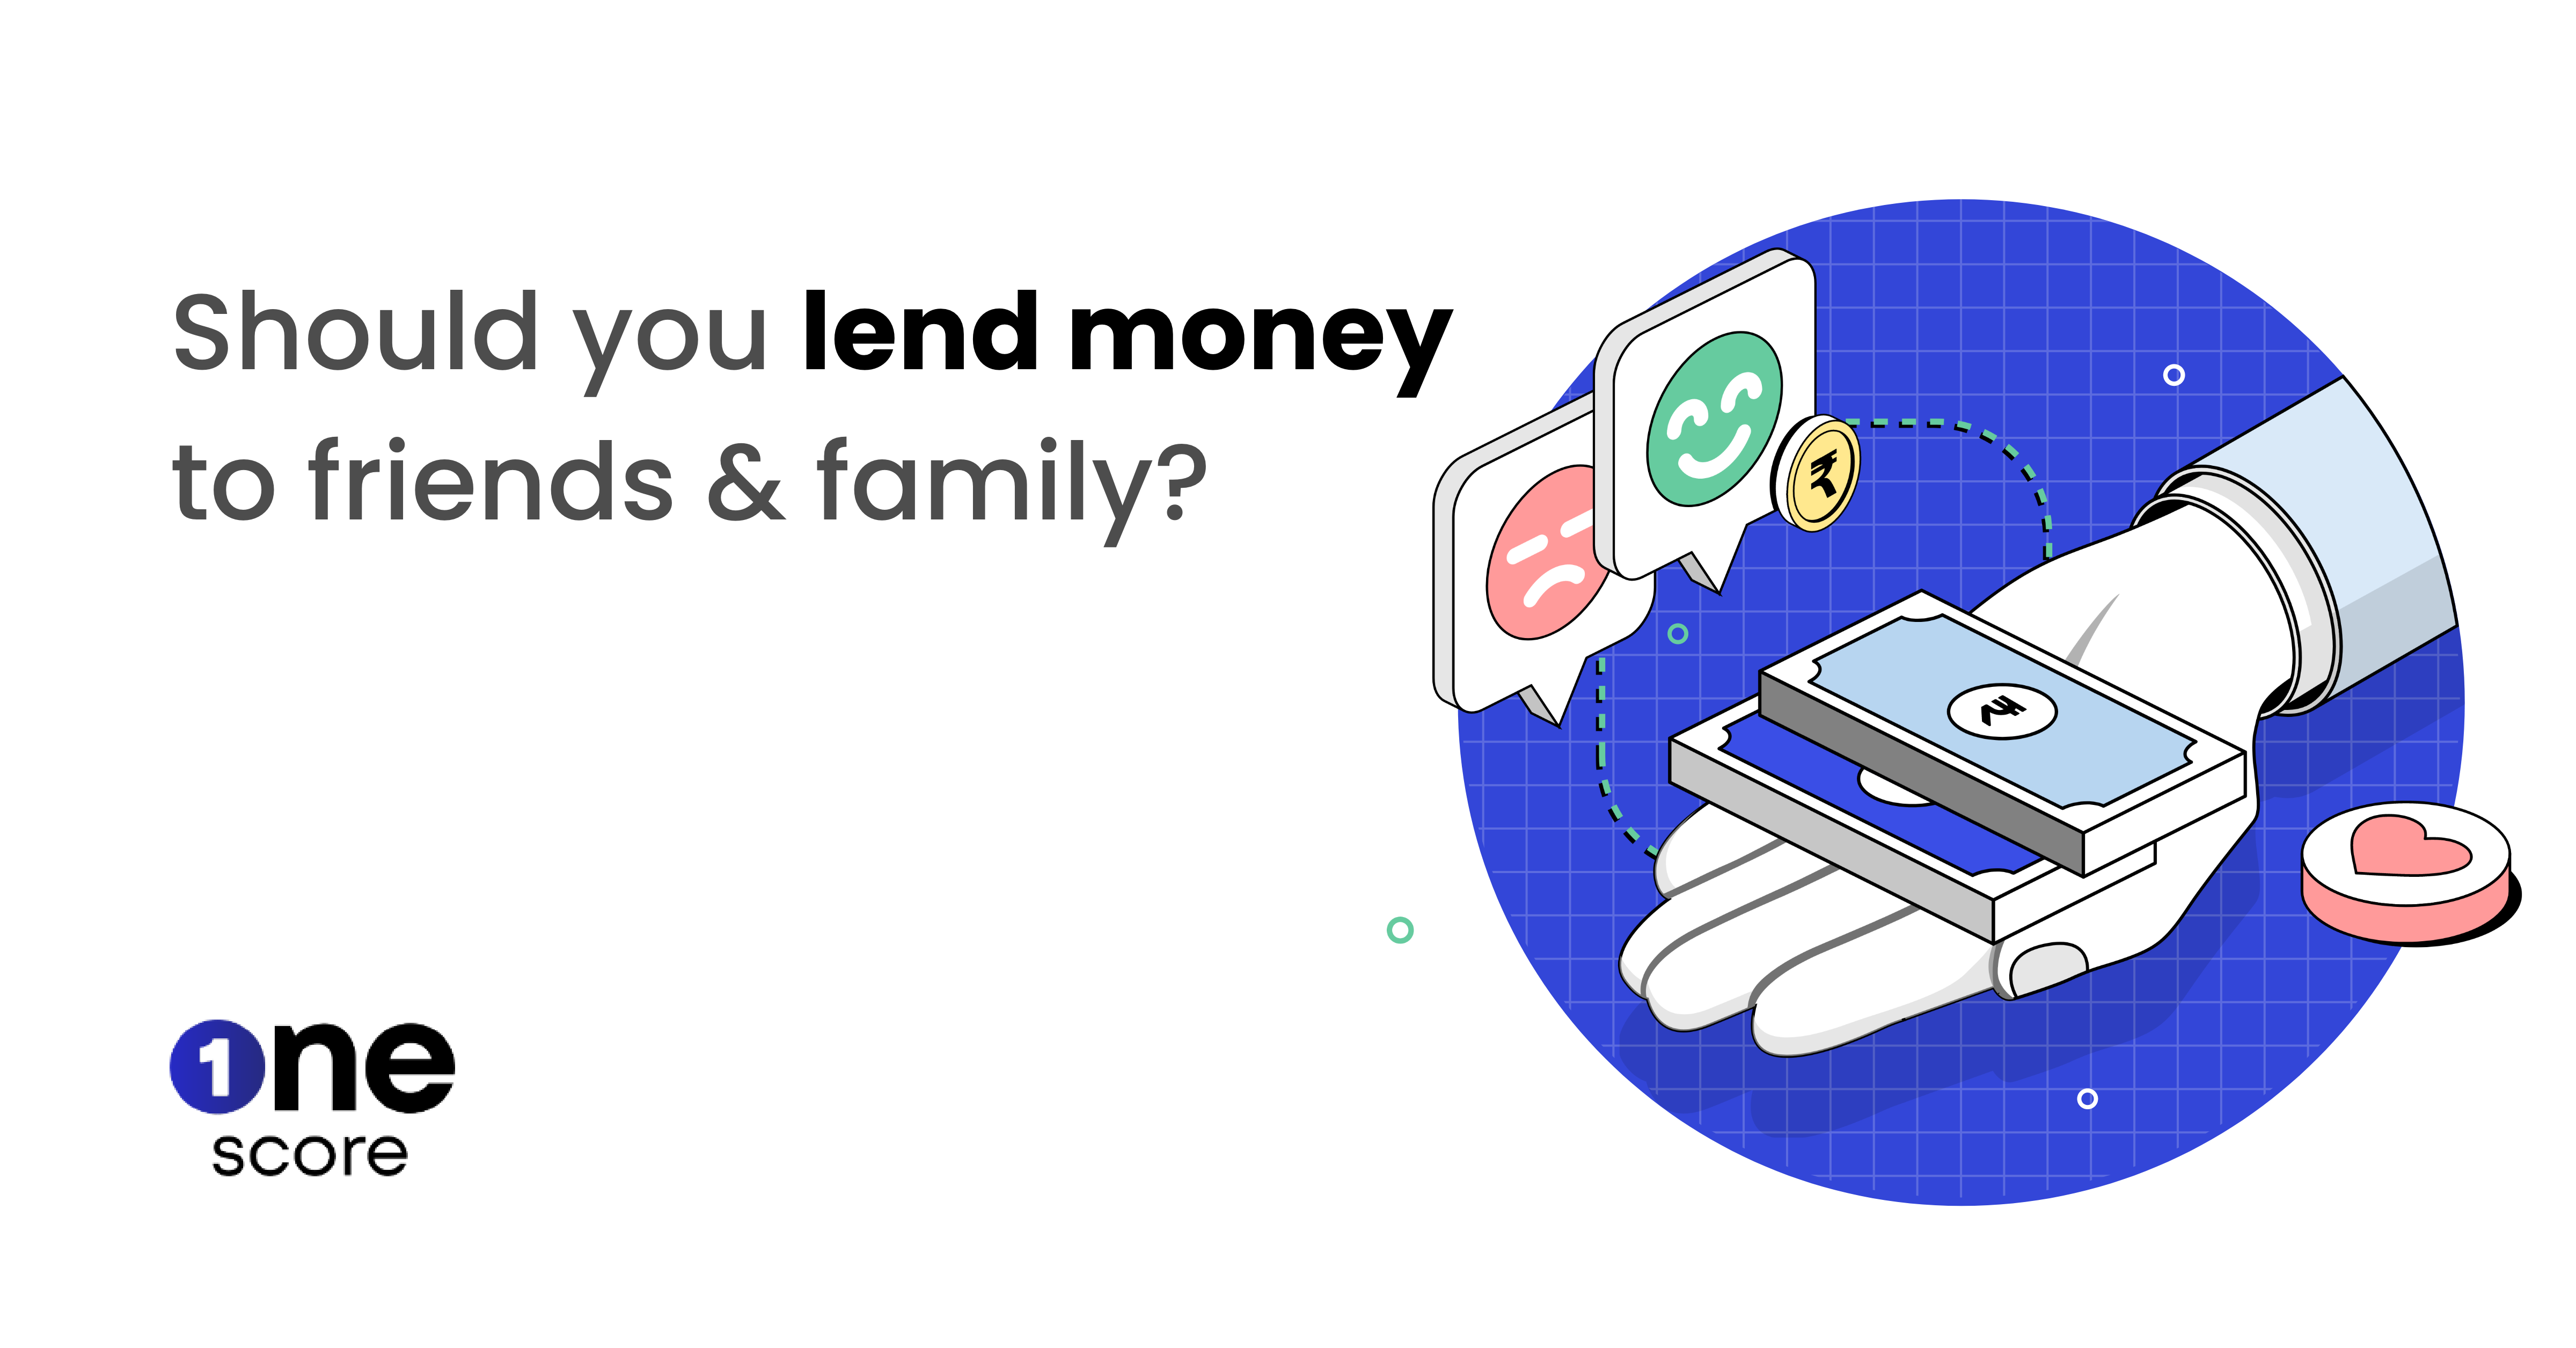  Lending money to friends & family: The Do's & Don'ts